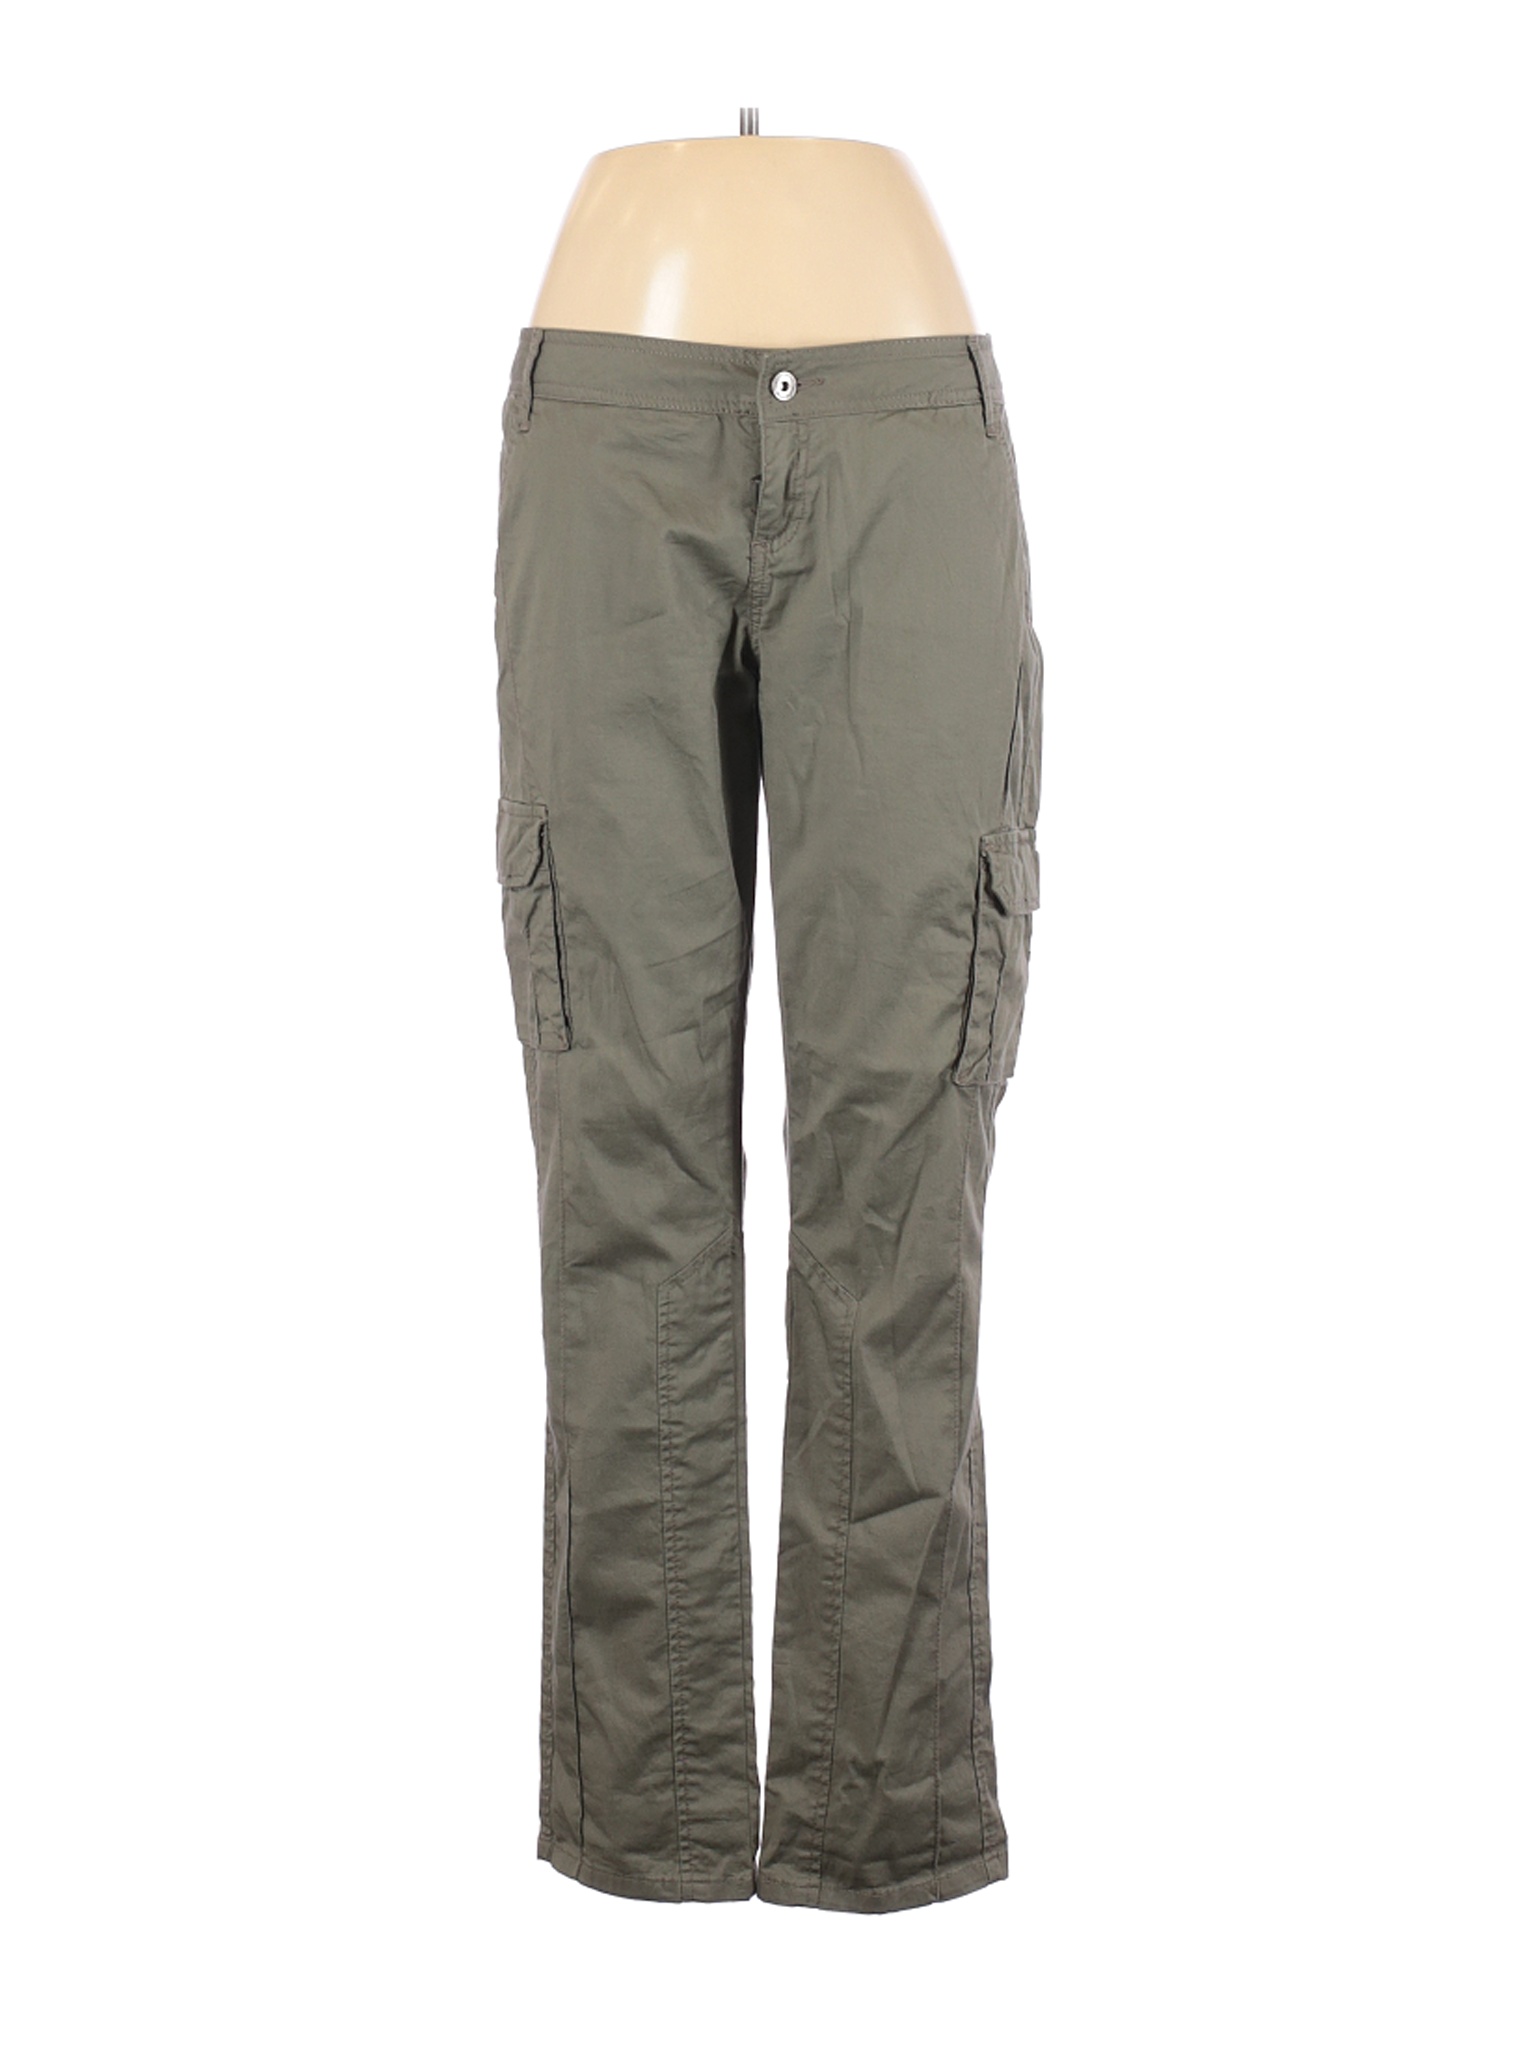 American Rag Cie Women Green Cargo Pants 7 | eBay